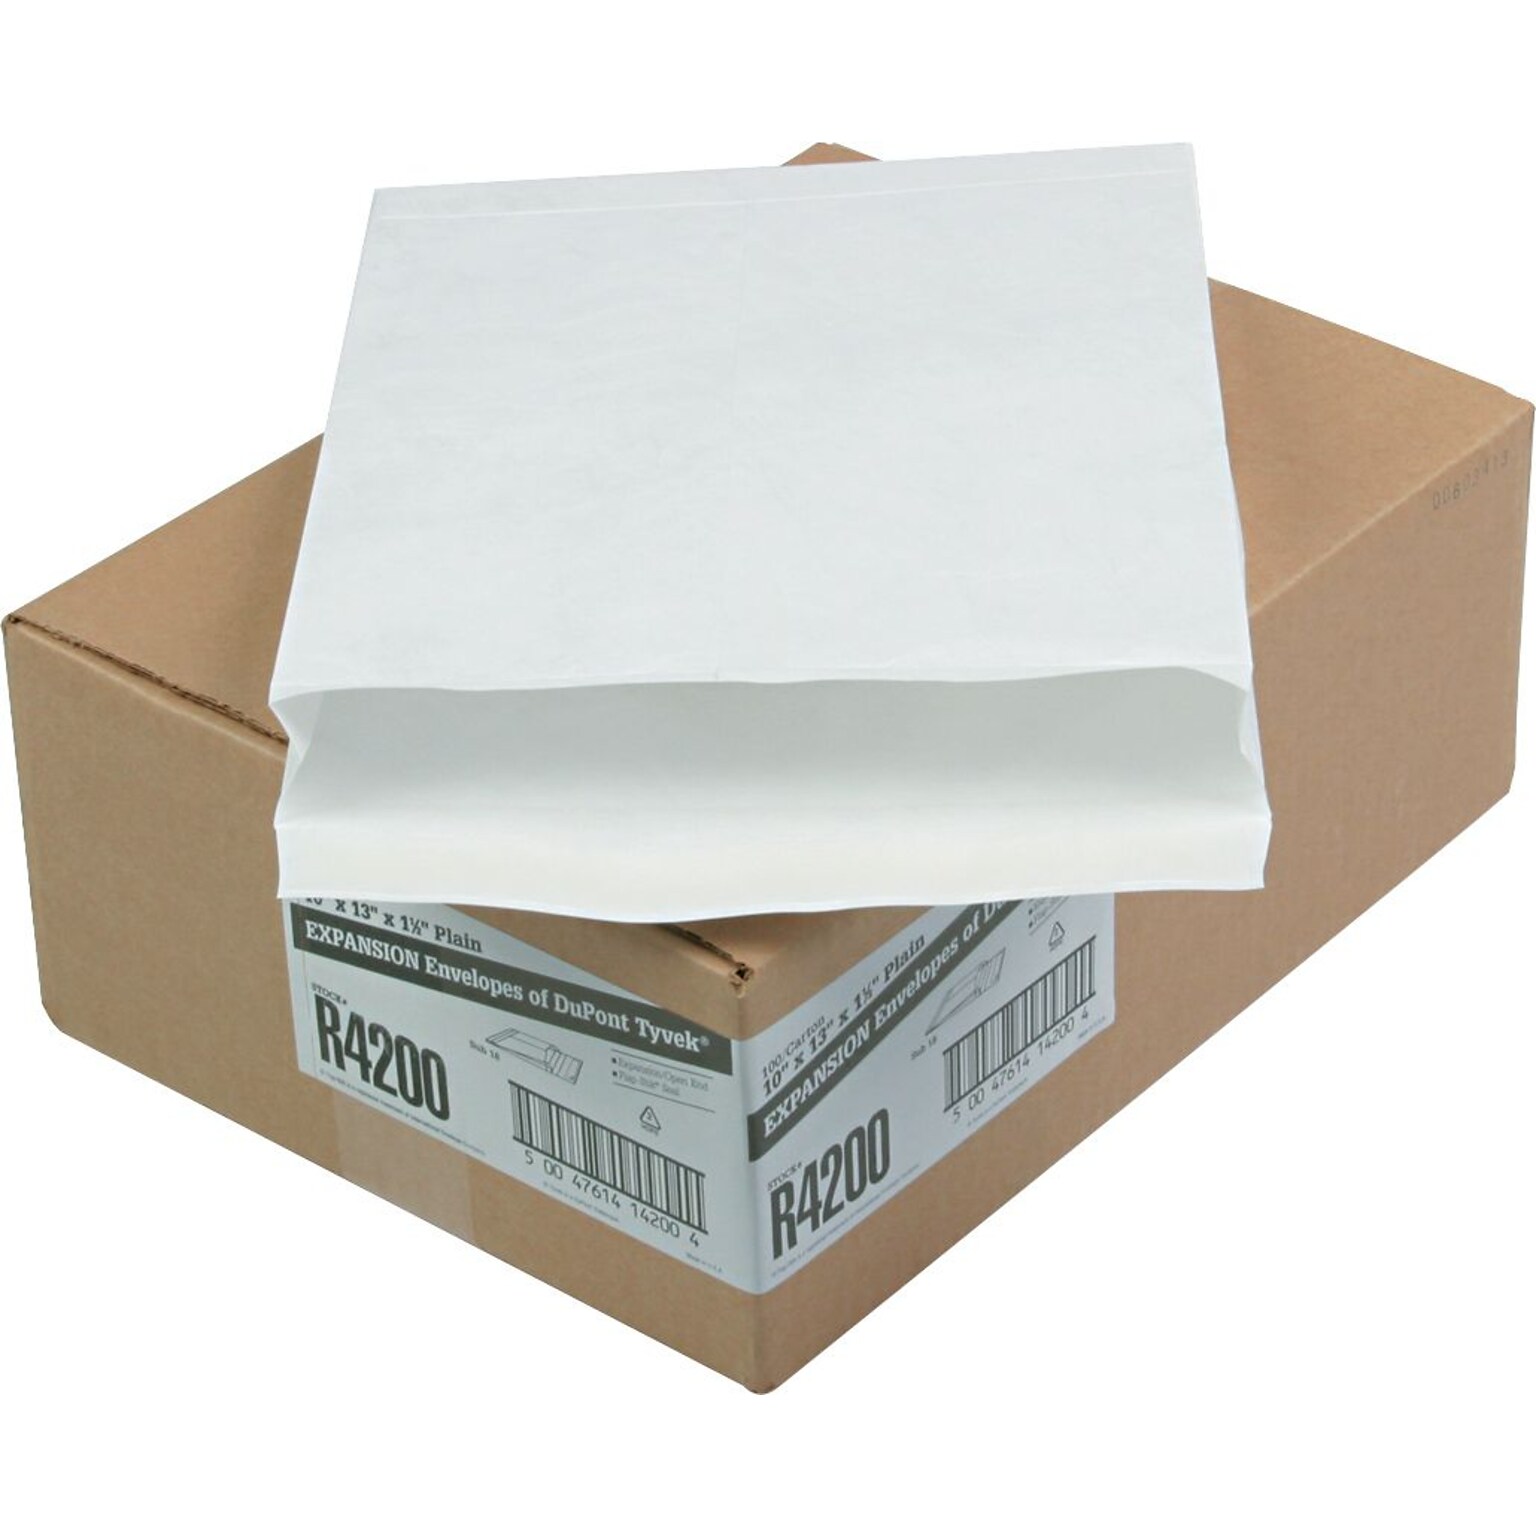 Quality Park Expansion Self Seal #13 Catalog Envelope, 10 x 13 x 1 1/2, White, 100/Carton (R4200)